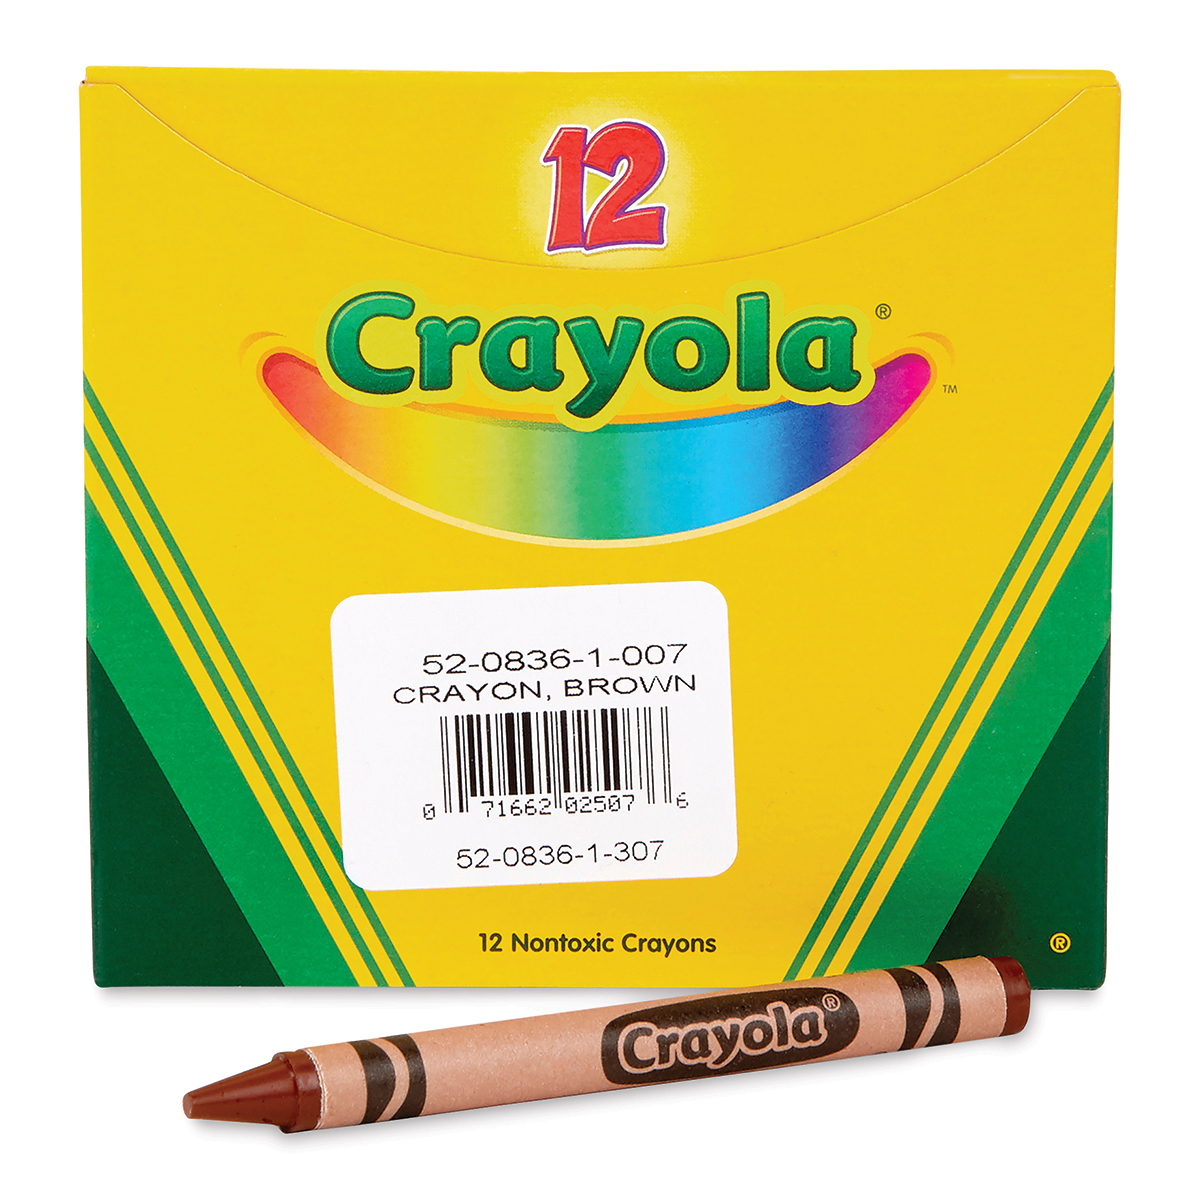 Kids' Crayons  BLICK Art Materials